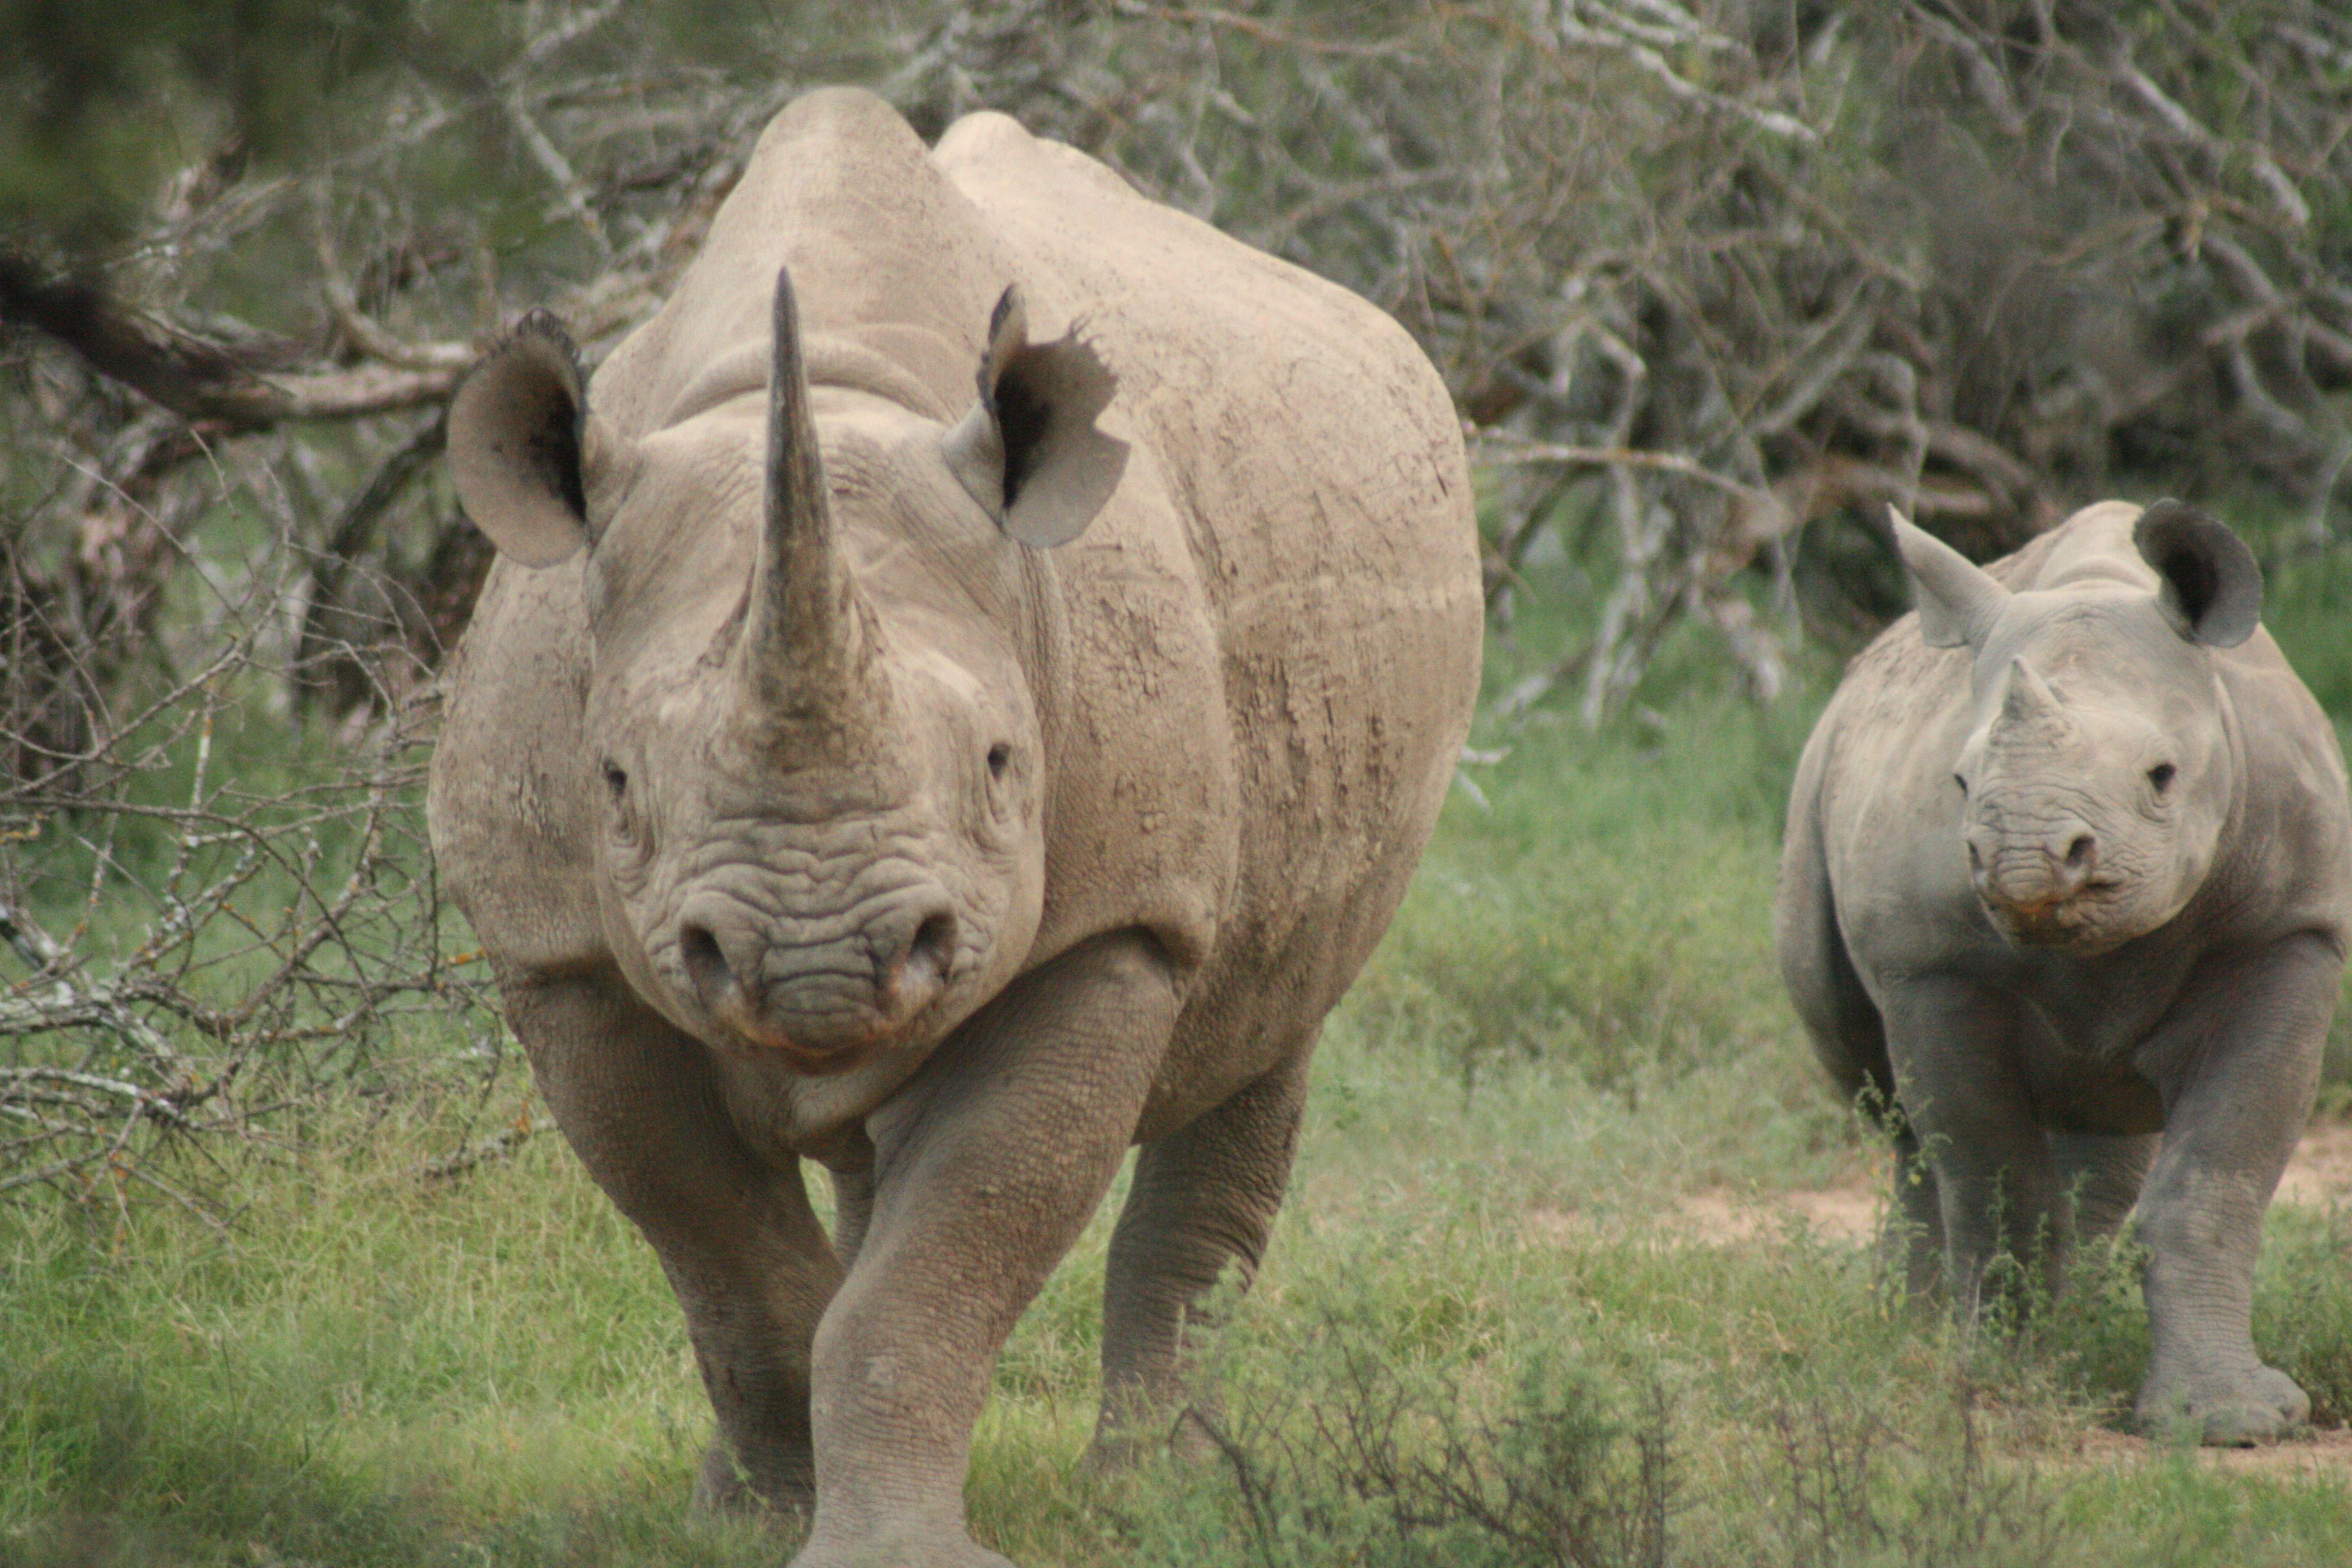 HD Rhino Wallpaper and Photo. HD Animals Wallpaper